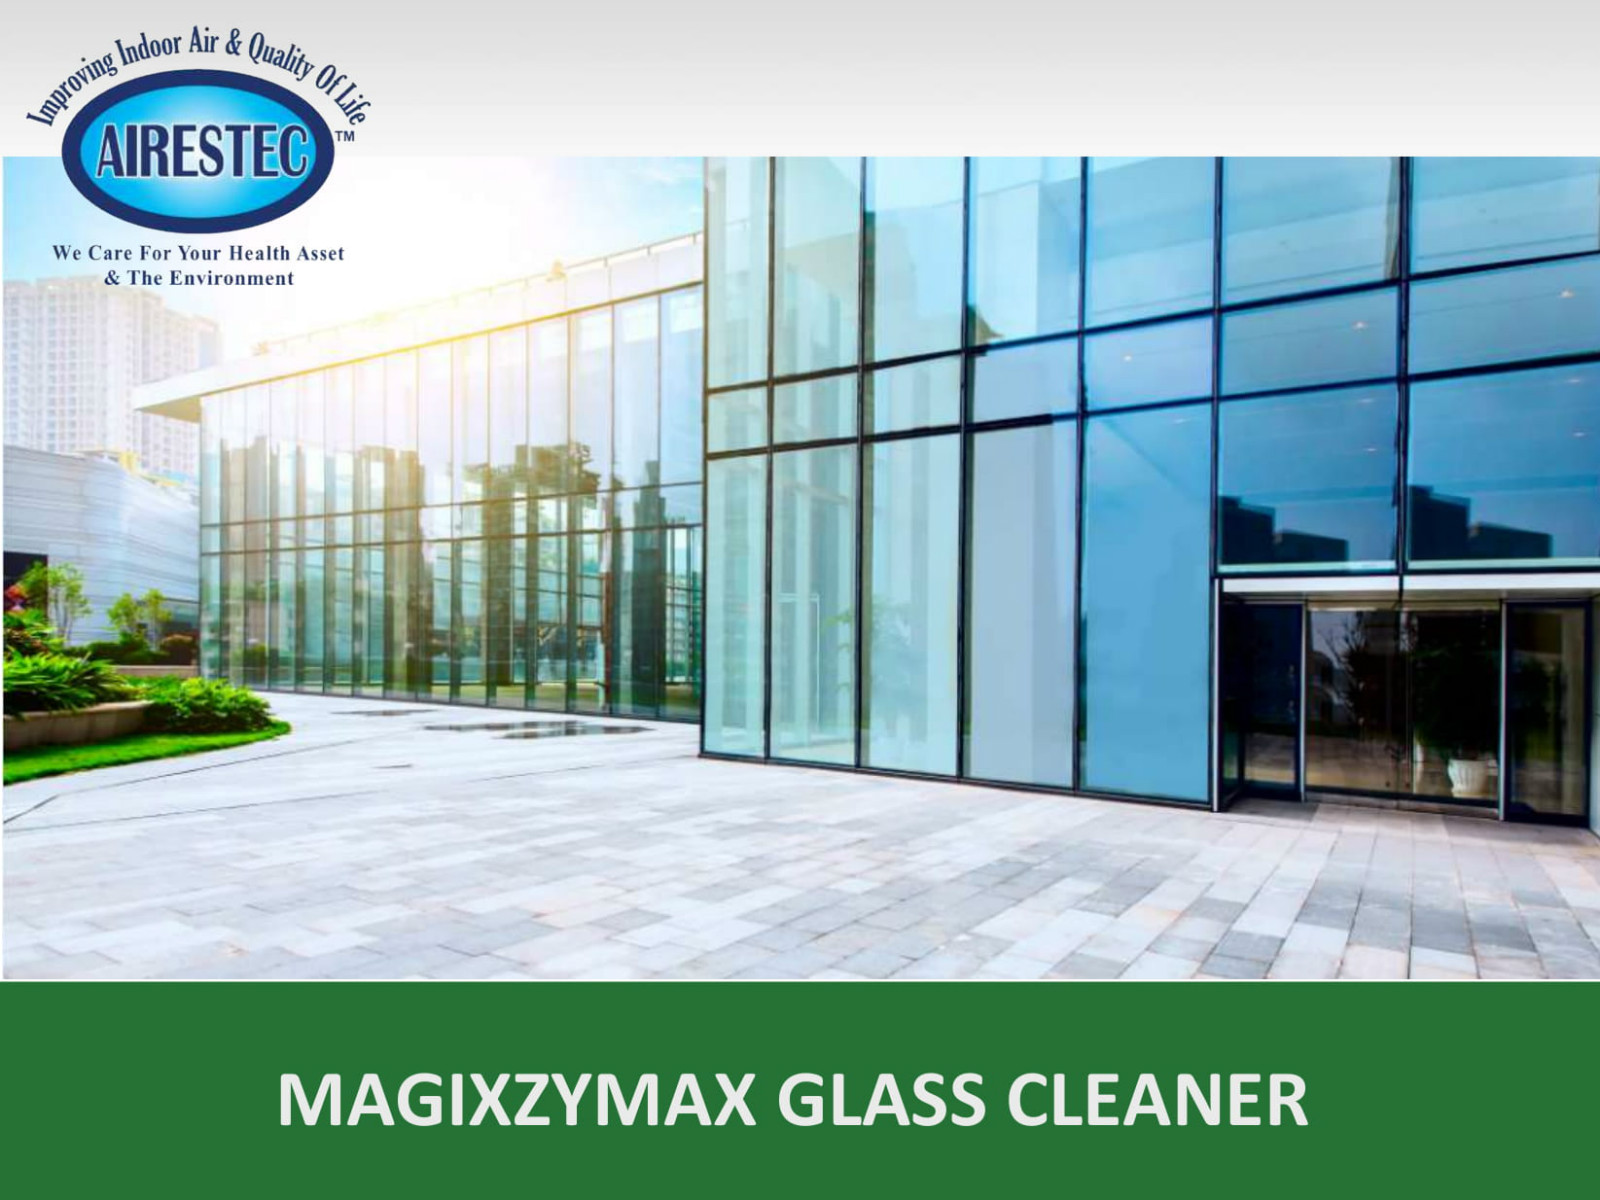 Magixzymax Glass Cleaner